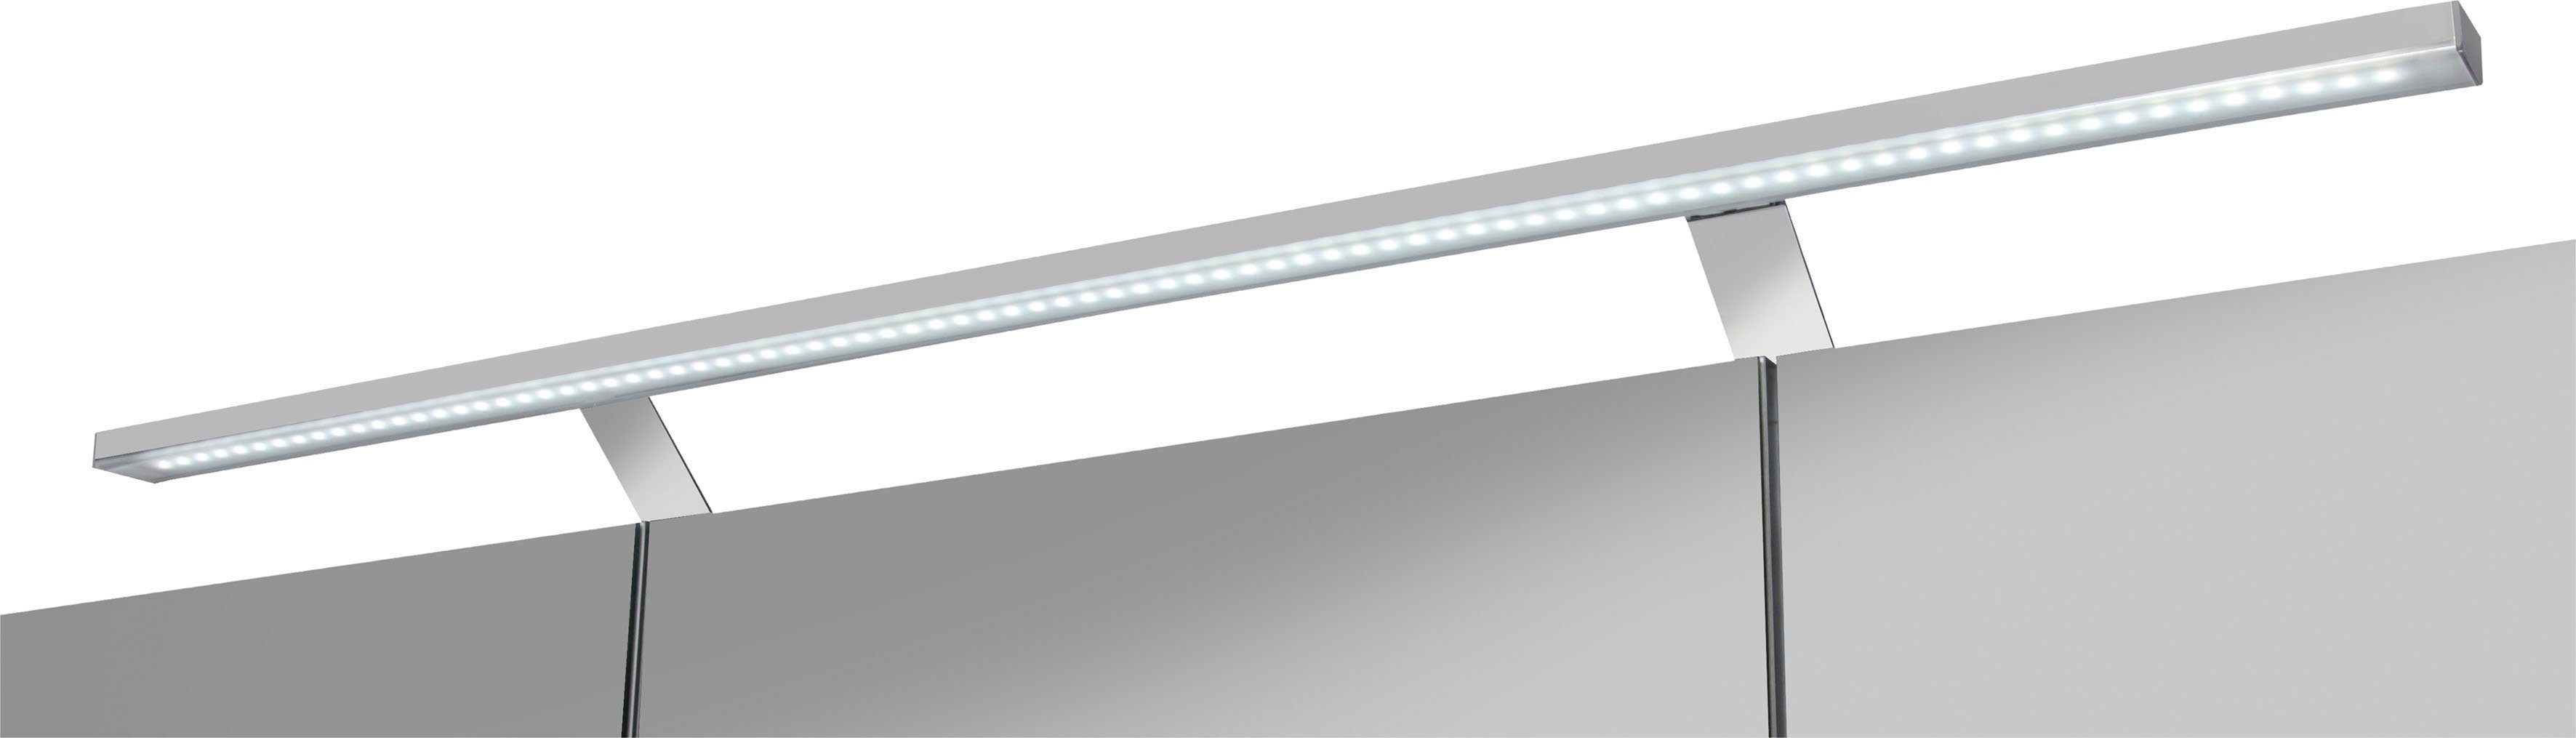 Schalter-/Steckdosenbox cm, kreideweiß 3-türig, 120 kreideweiß Torino | LED-Beleuchtung, Breite Spiegelschrank welltime